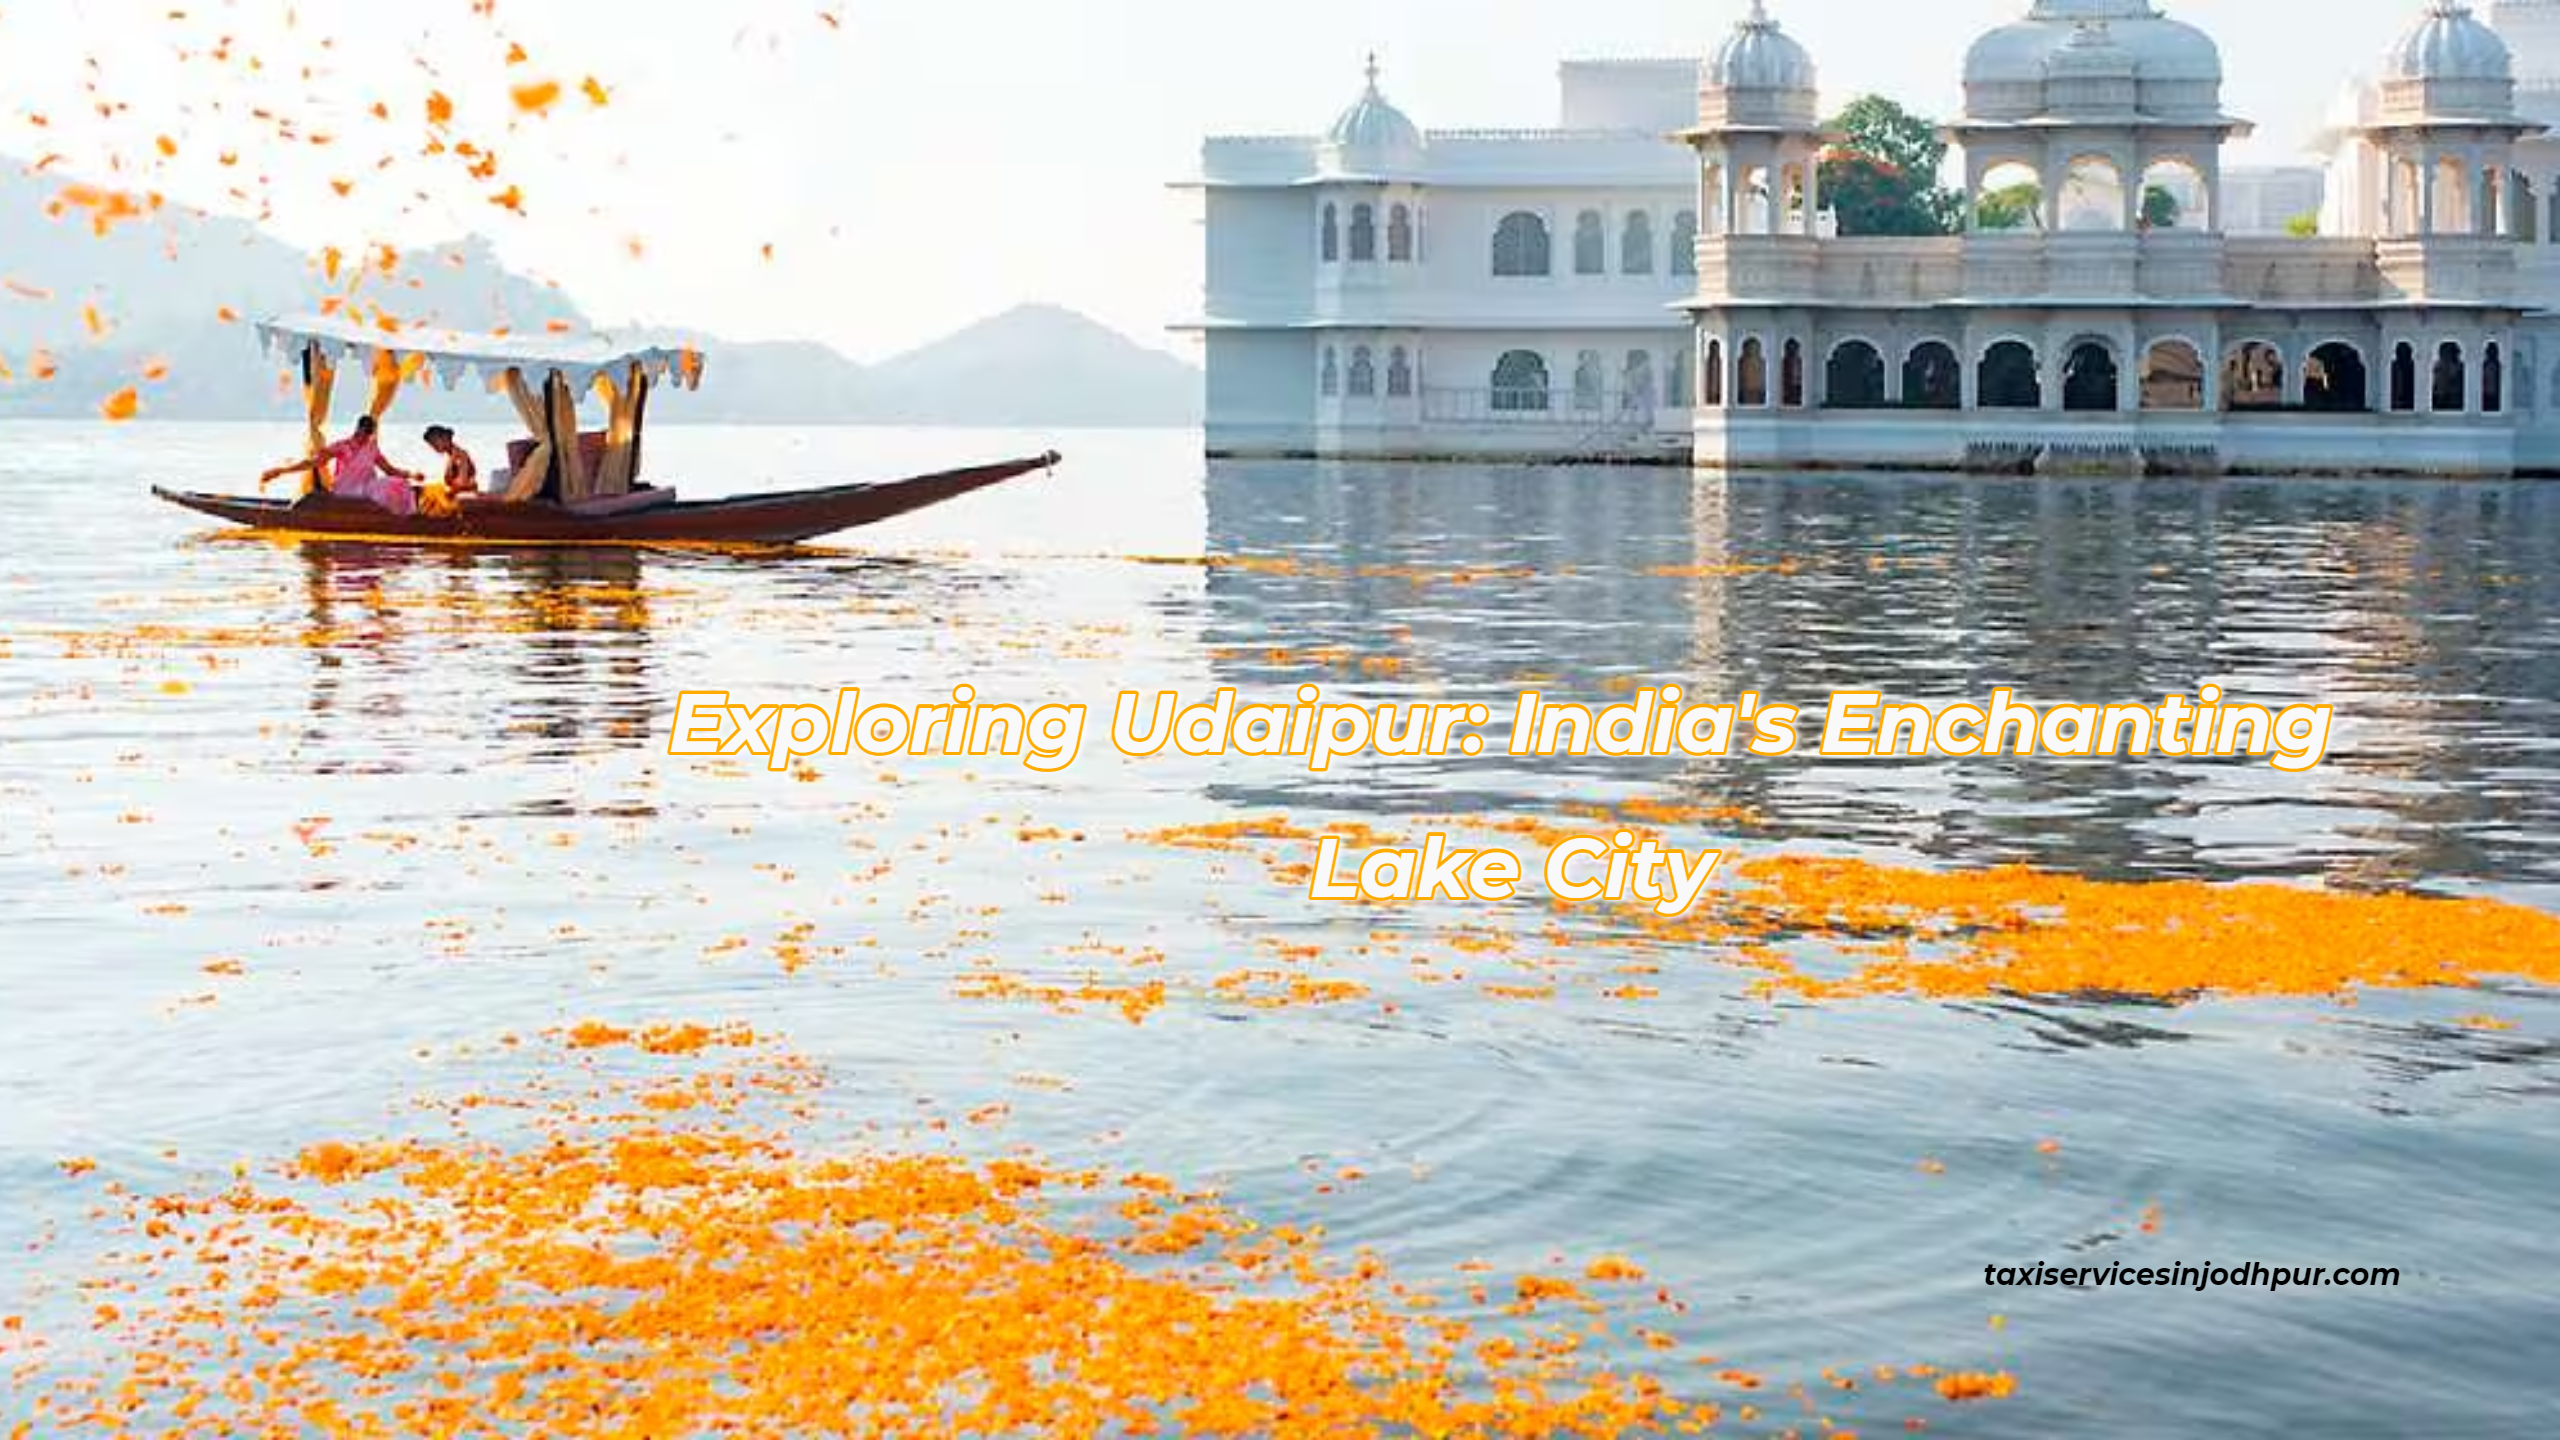 udaipur lakes, the city of lakes, jodhpur cabs